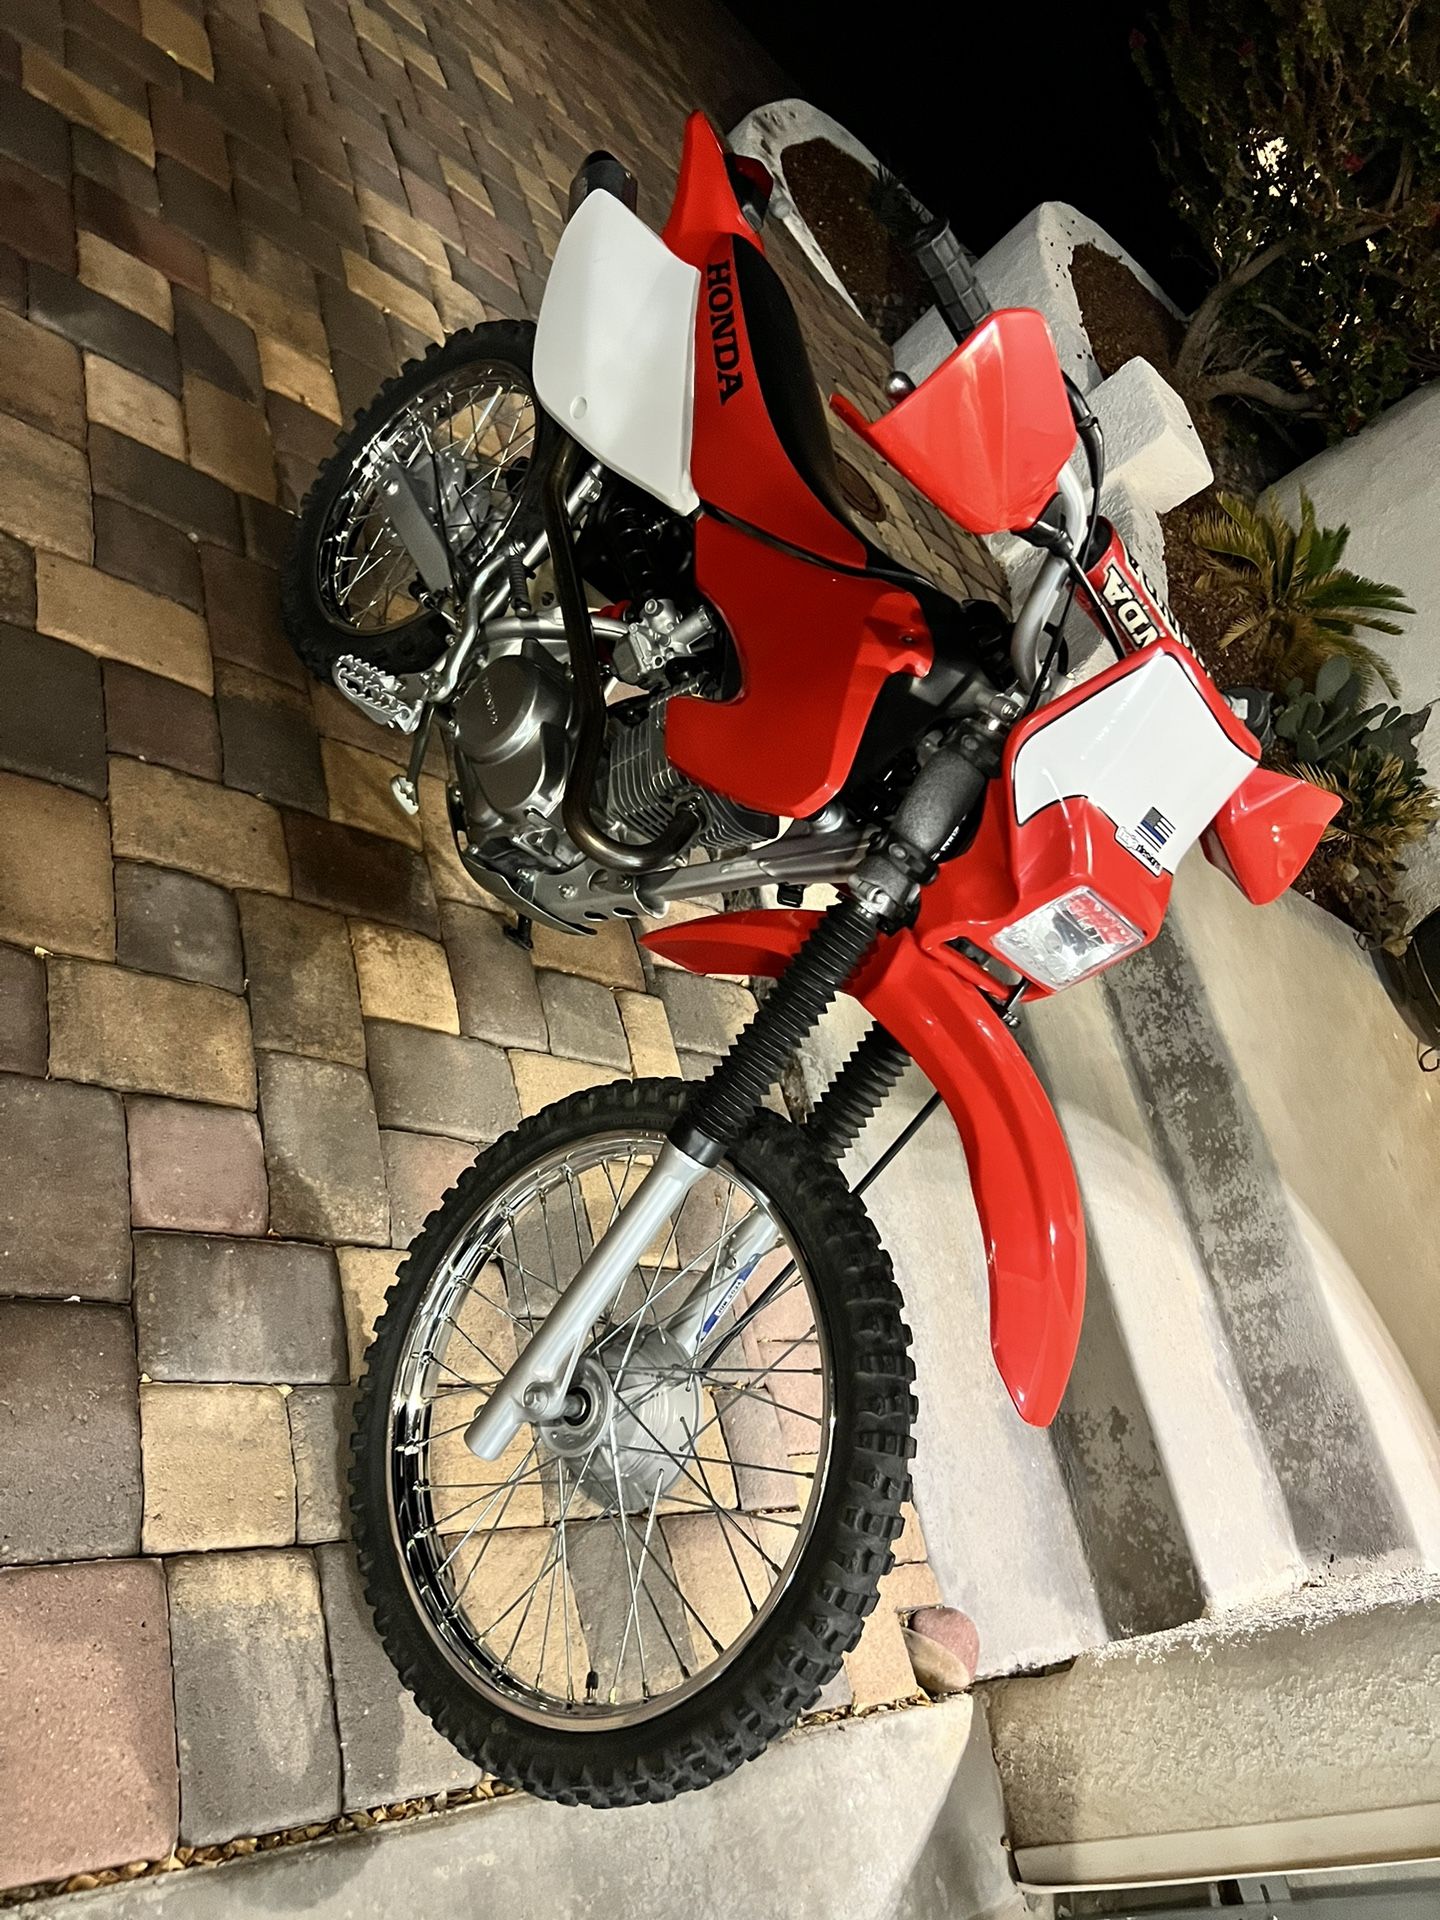 Honda XR 100 Dirt Bike